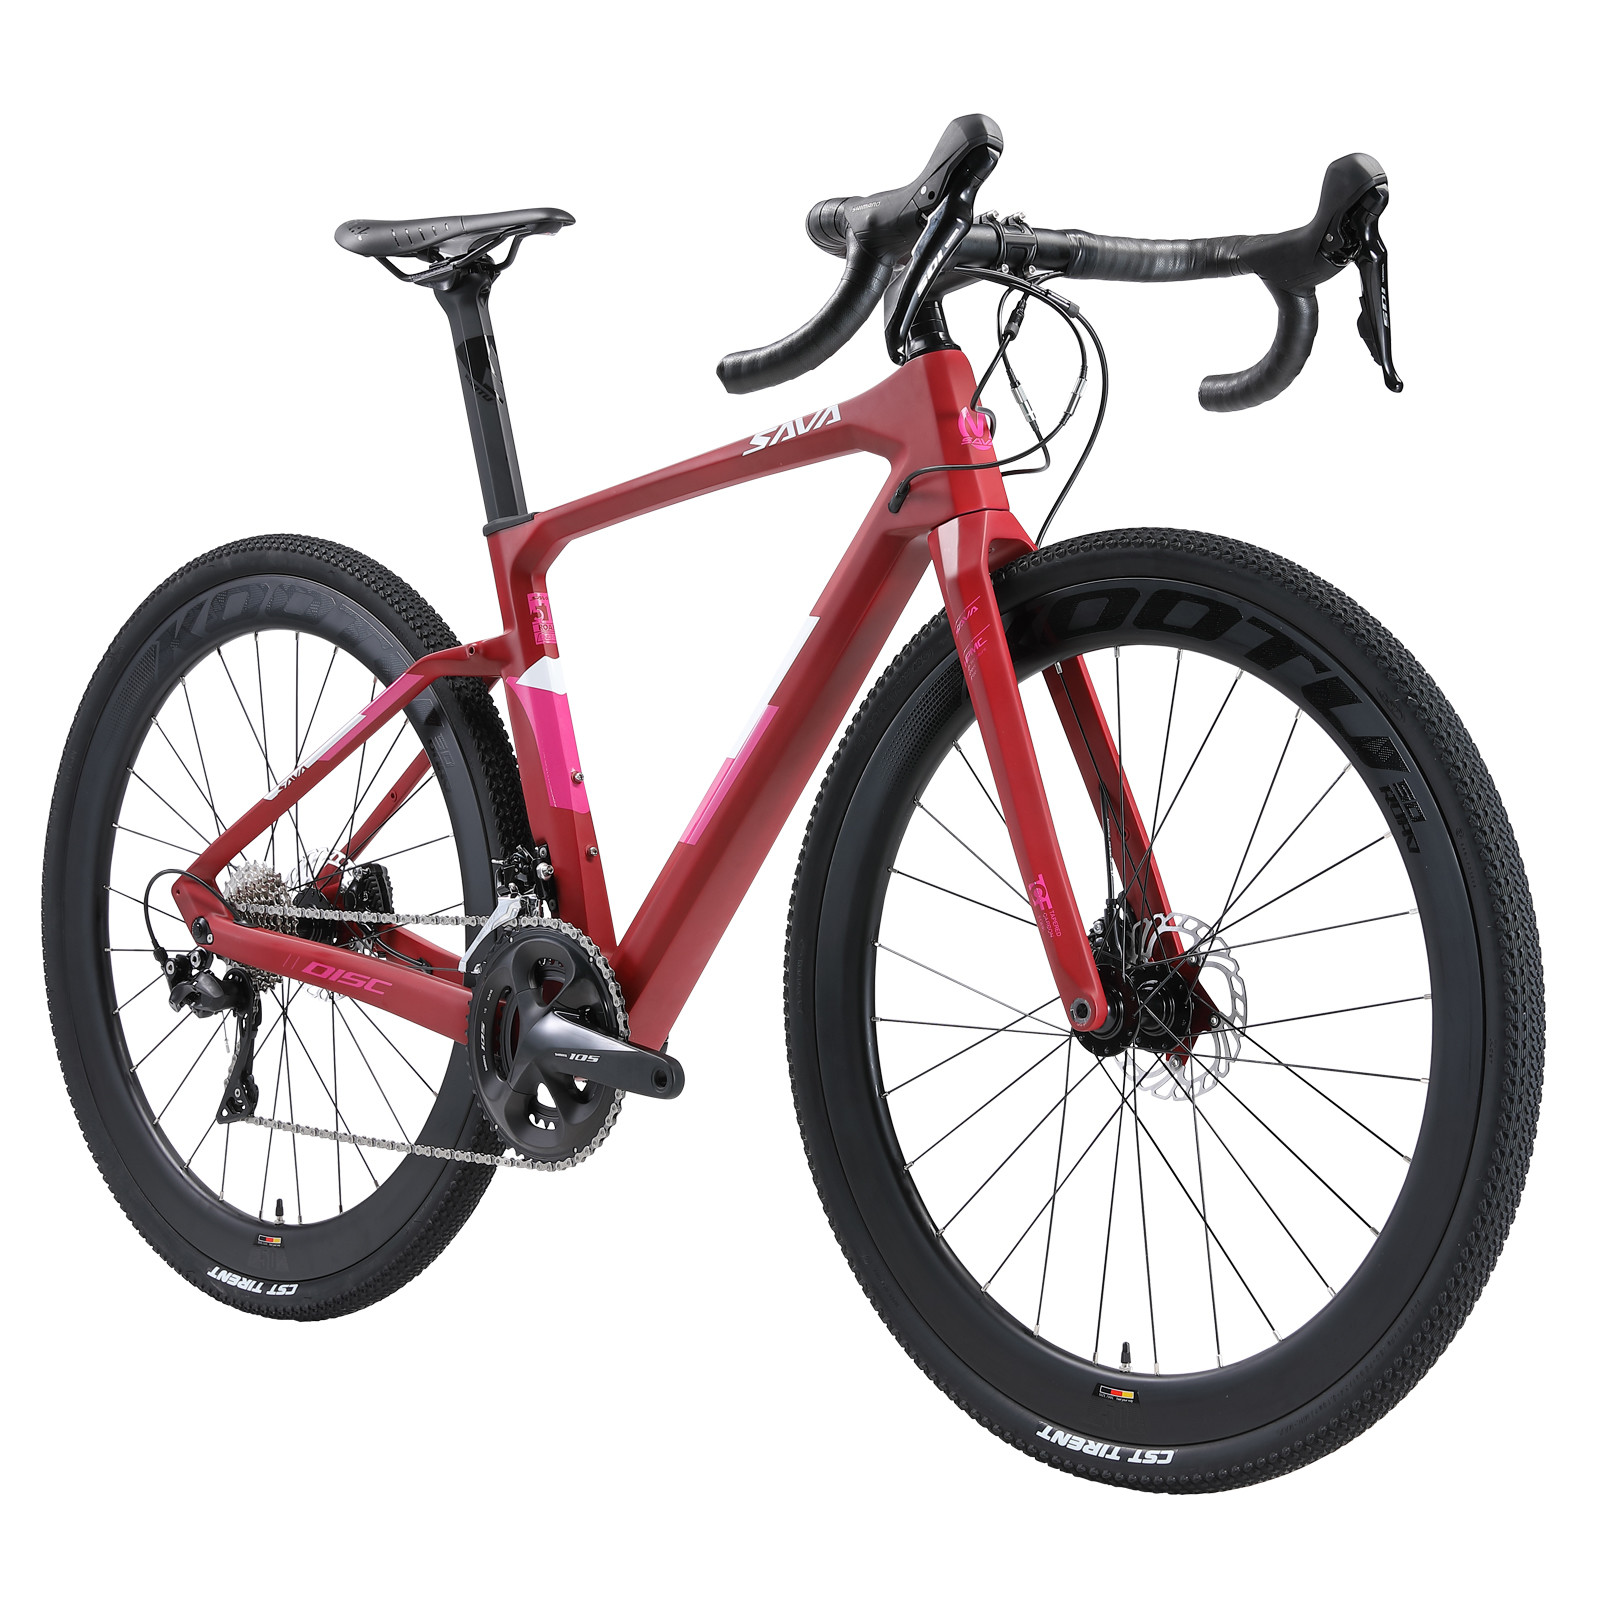 China 9kg Carbon Gravel Road Bike , Dark Red 54cm Frame Bike 22 Speed on sale